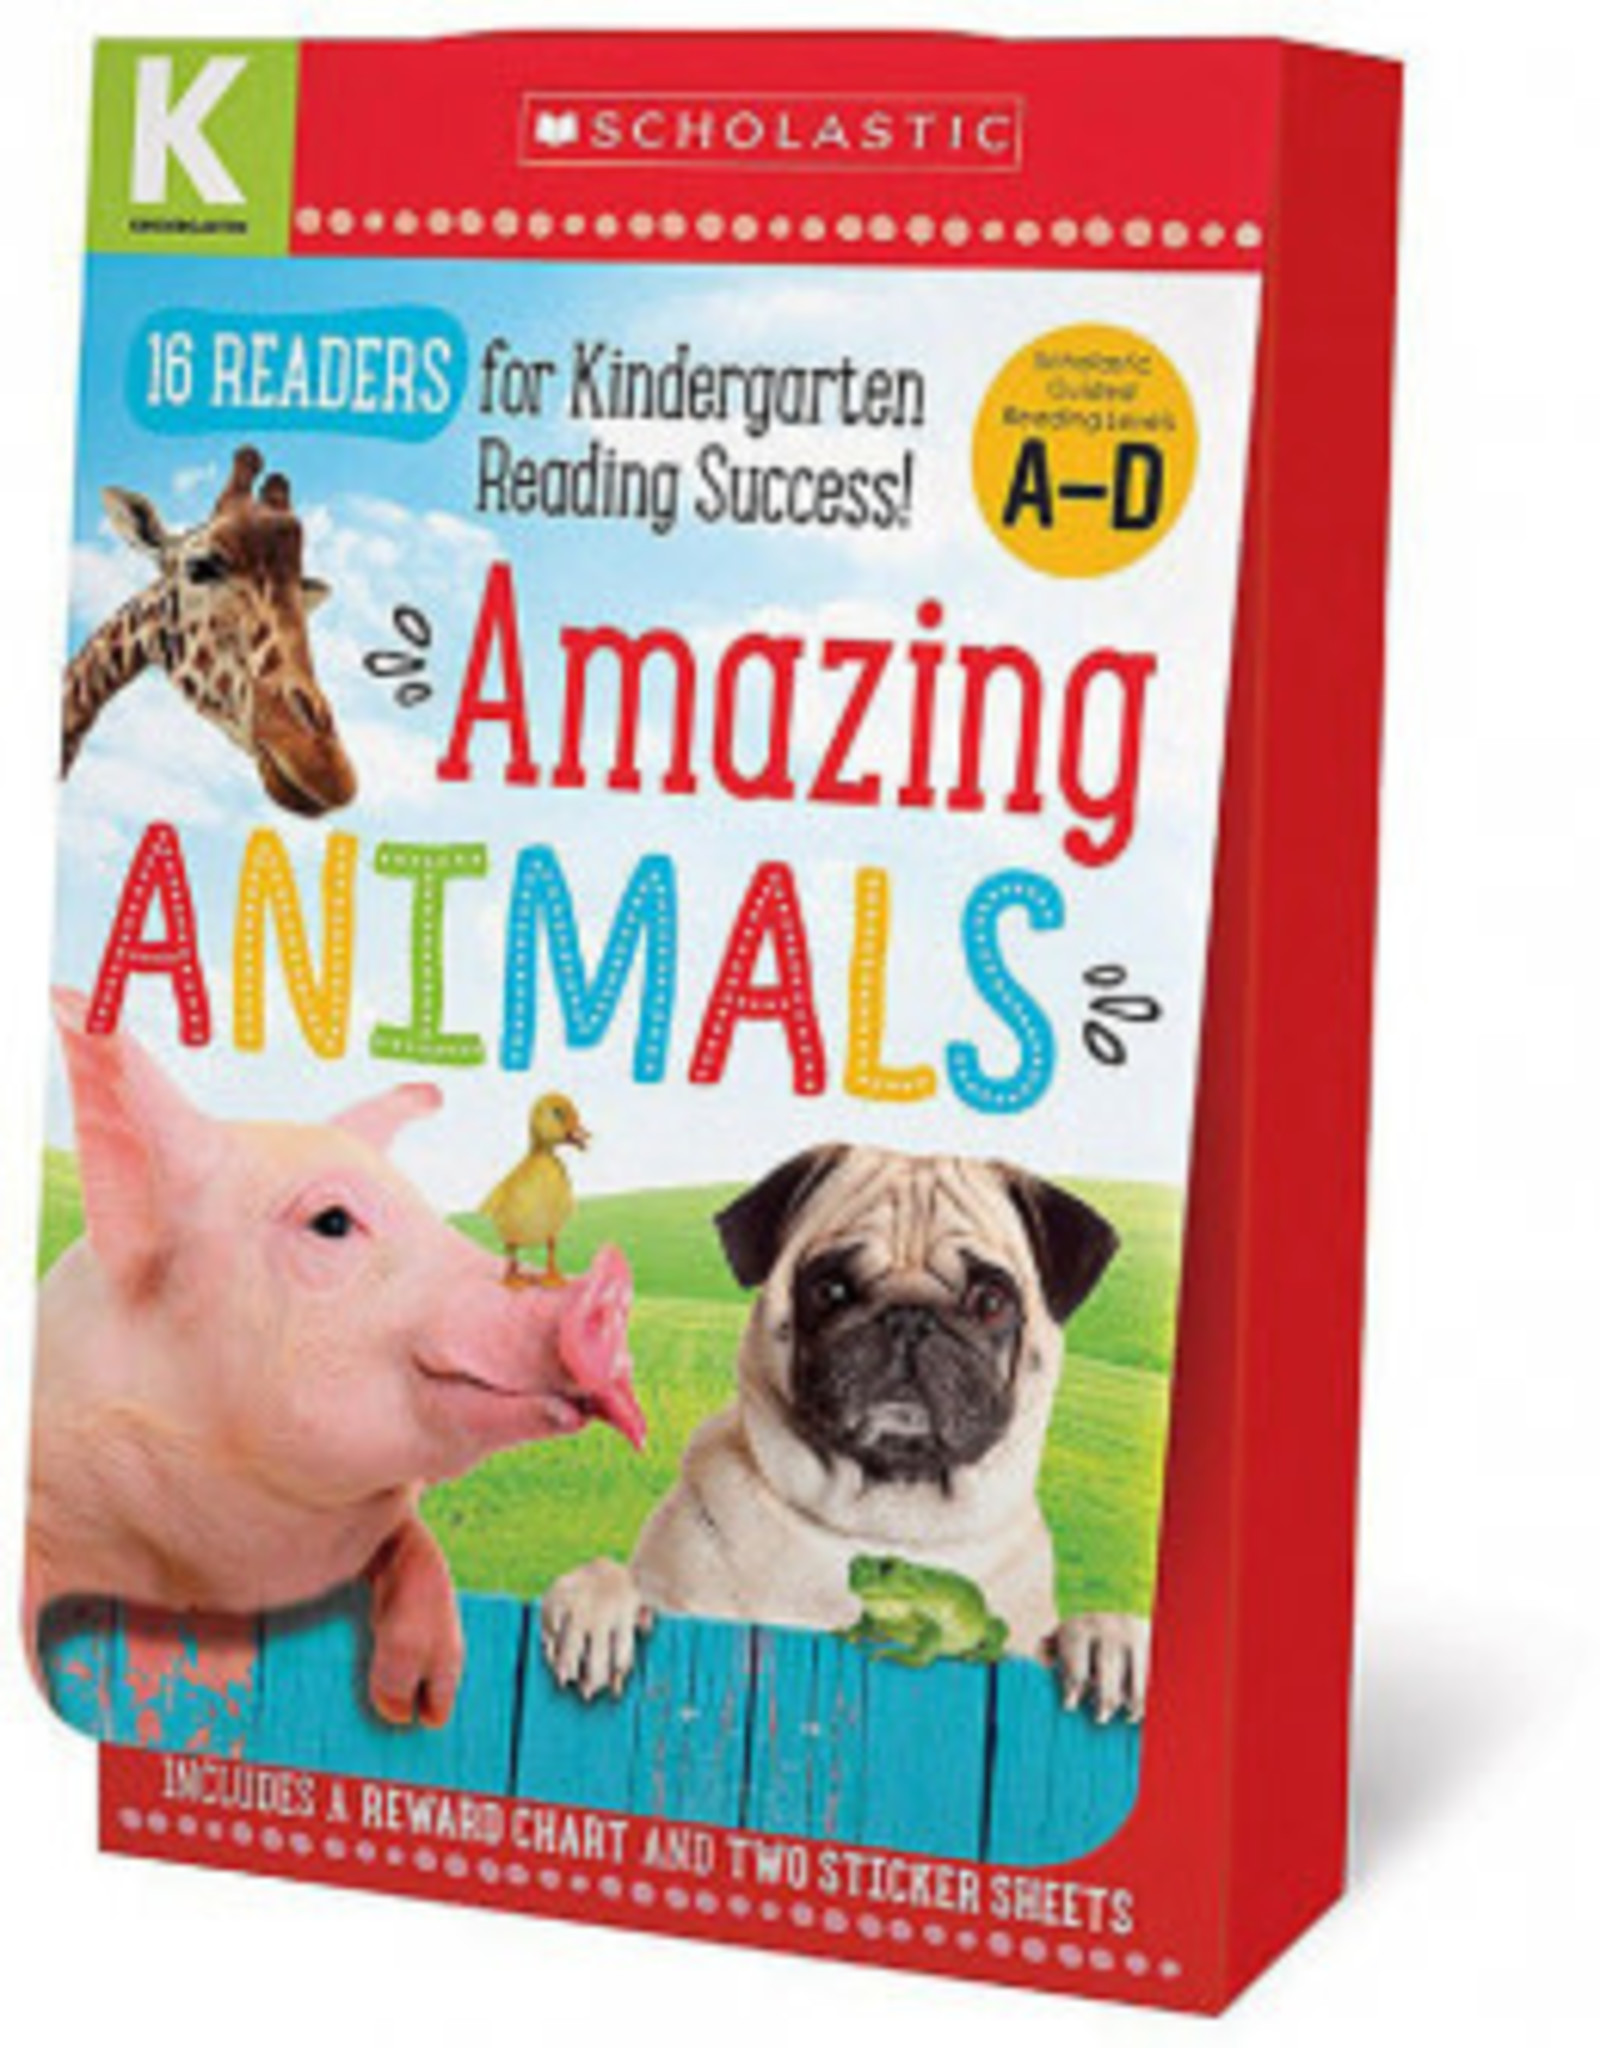 Scholastic Kindergarten A-D Reader Box Set: Amazing Animals